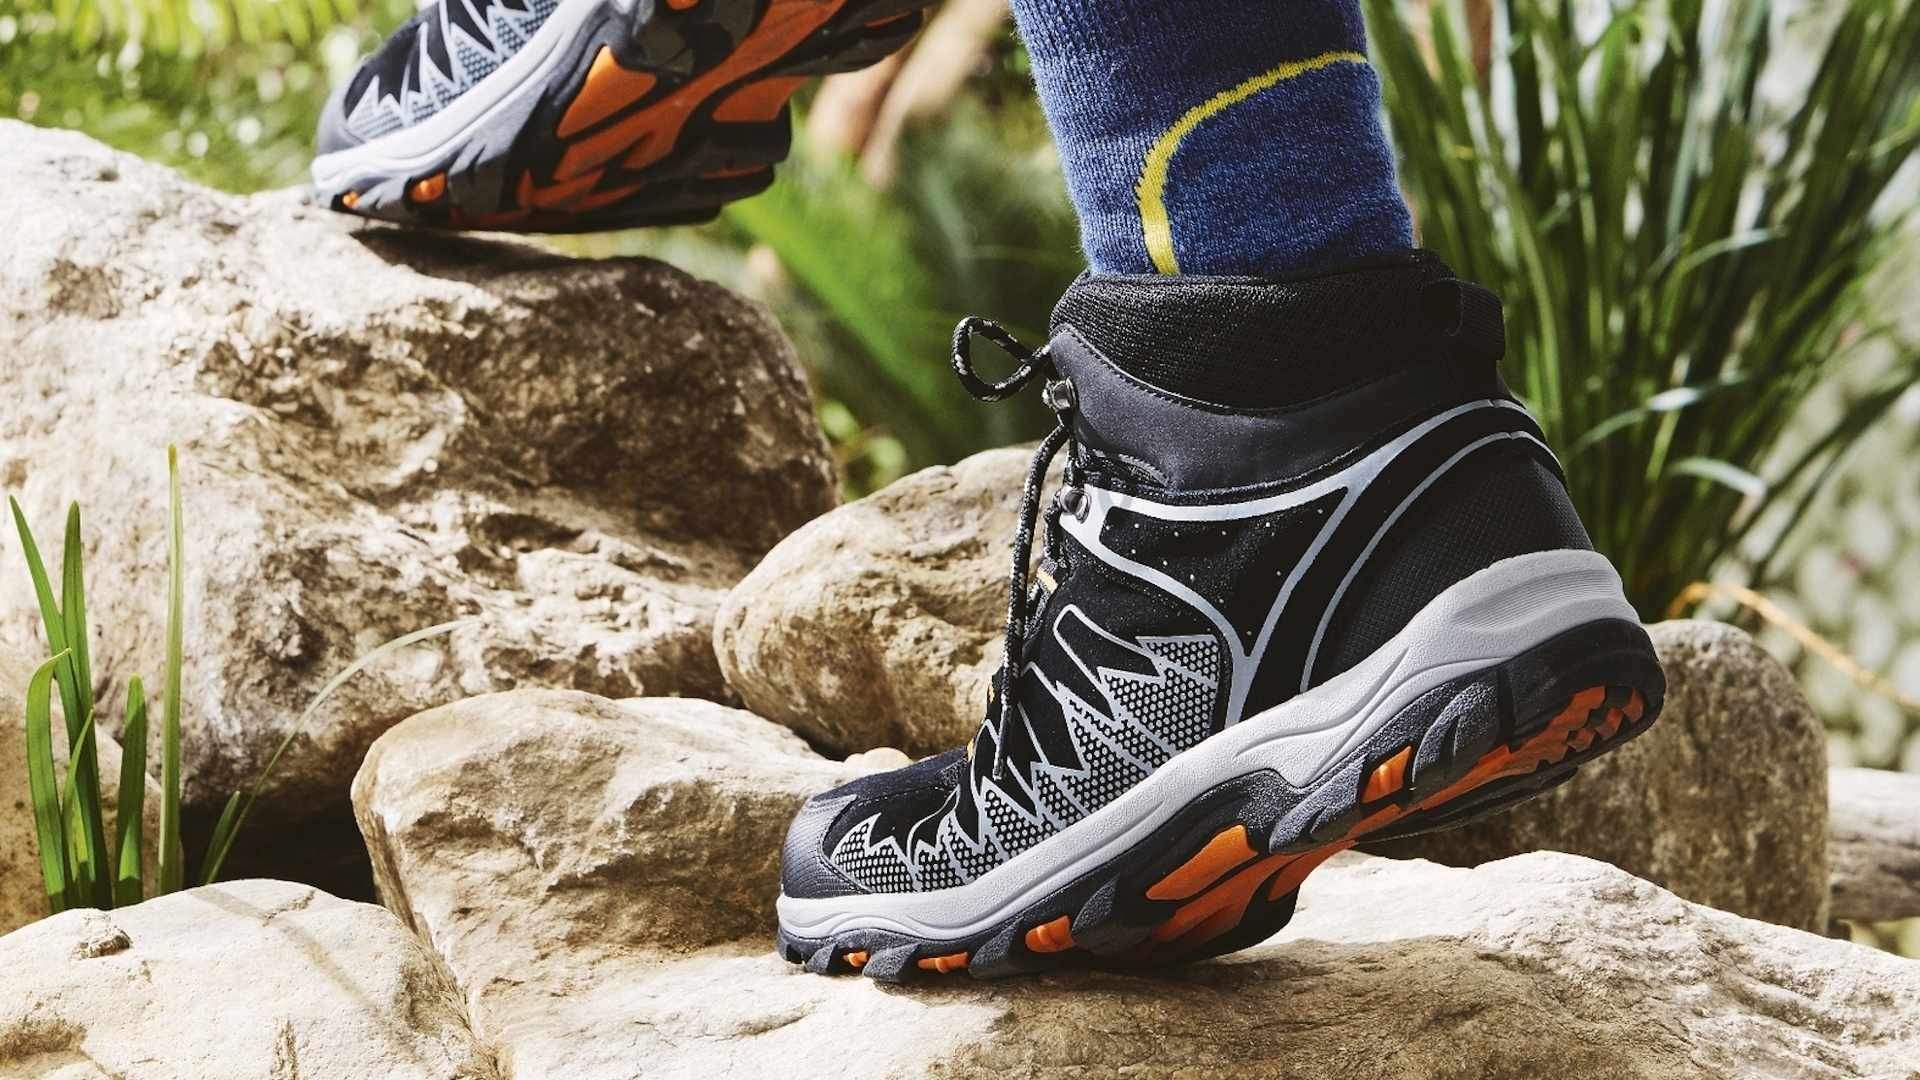 aldi hiking boots 2019